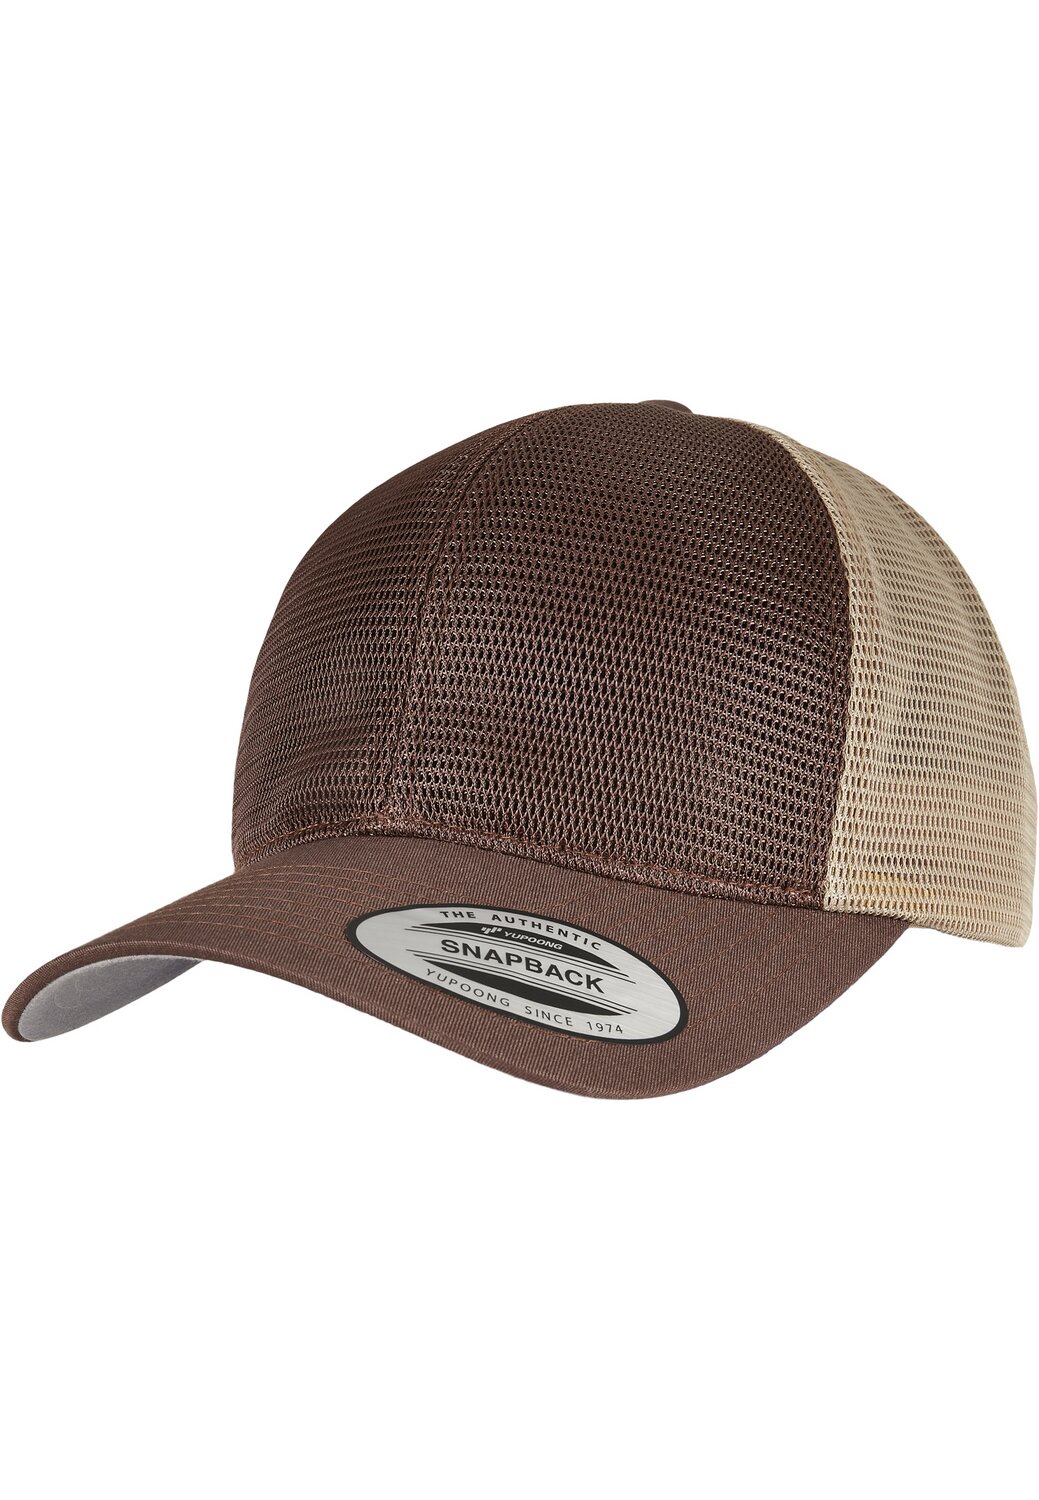 Baseball Cap 360° Omnimesh Flexfit 2-Tone brown/khaki | MAXISCOOT | Flex Caps